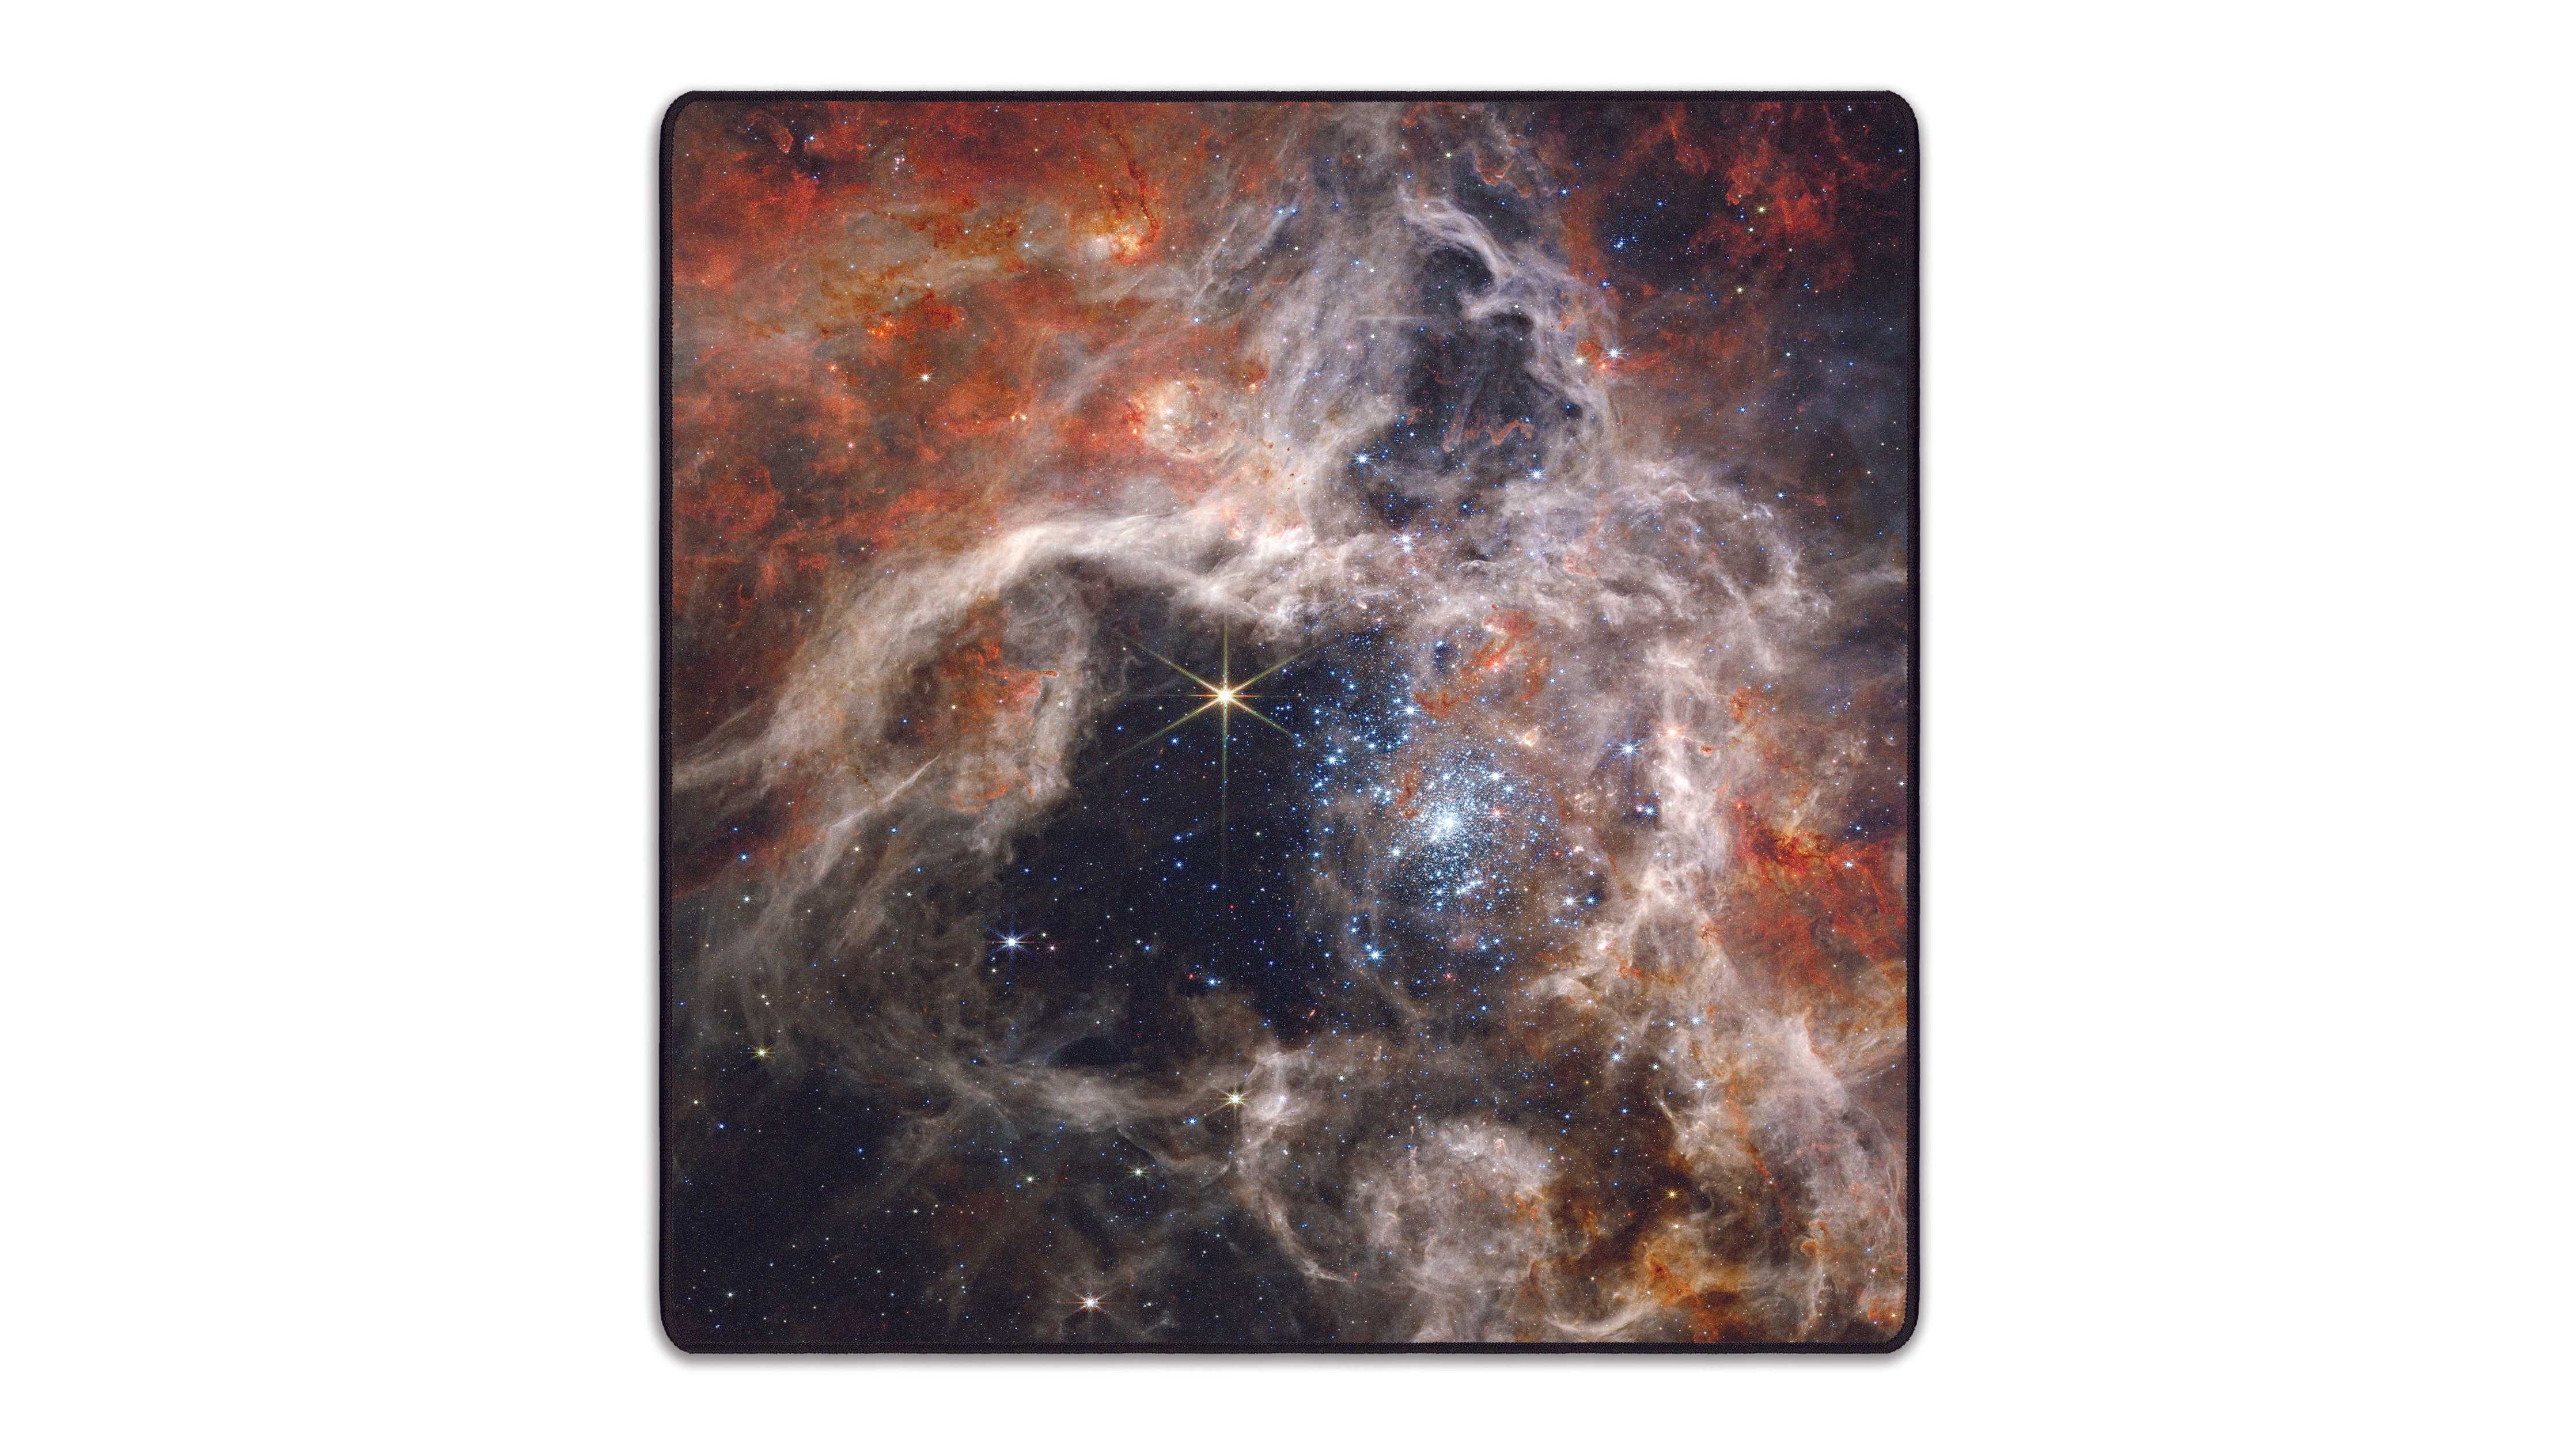 Tarantula Nebula by JWST - The Mousepad Company